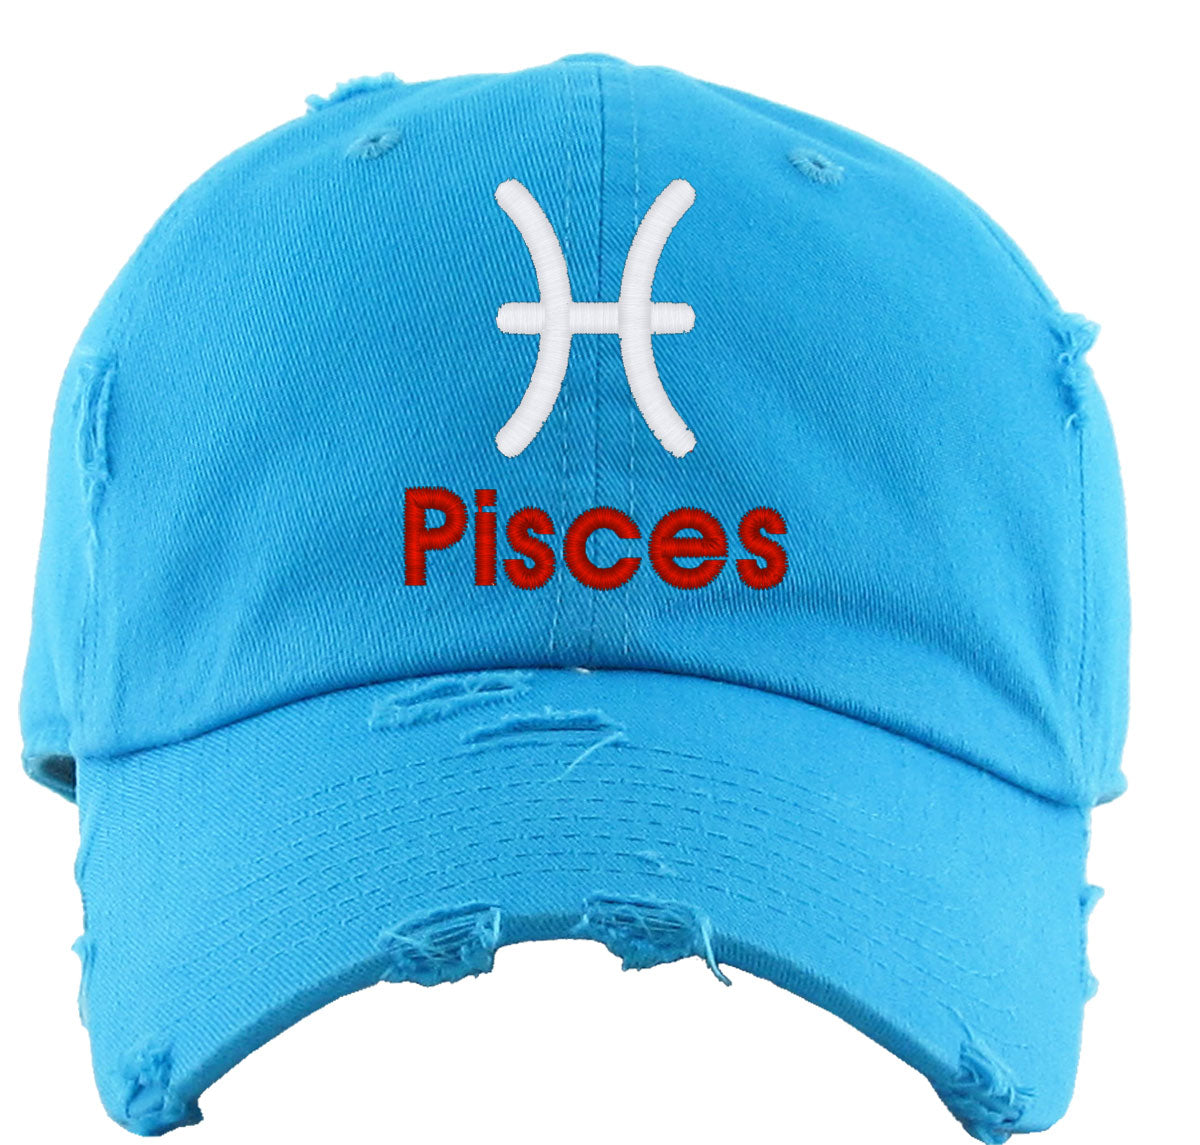 Pisces Zodiac Sign Horoscope Astrology Vintage Baseball Cap